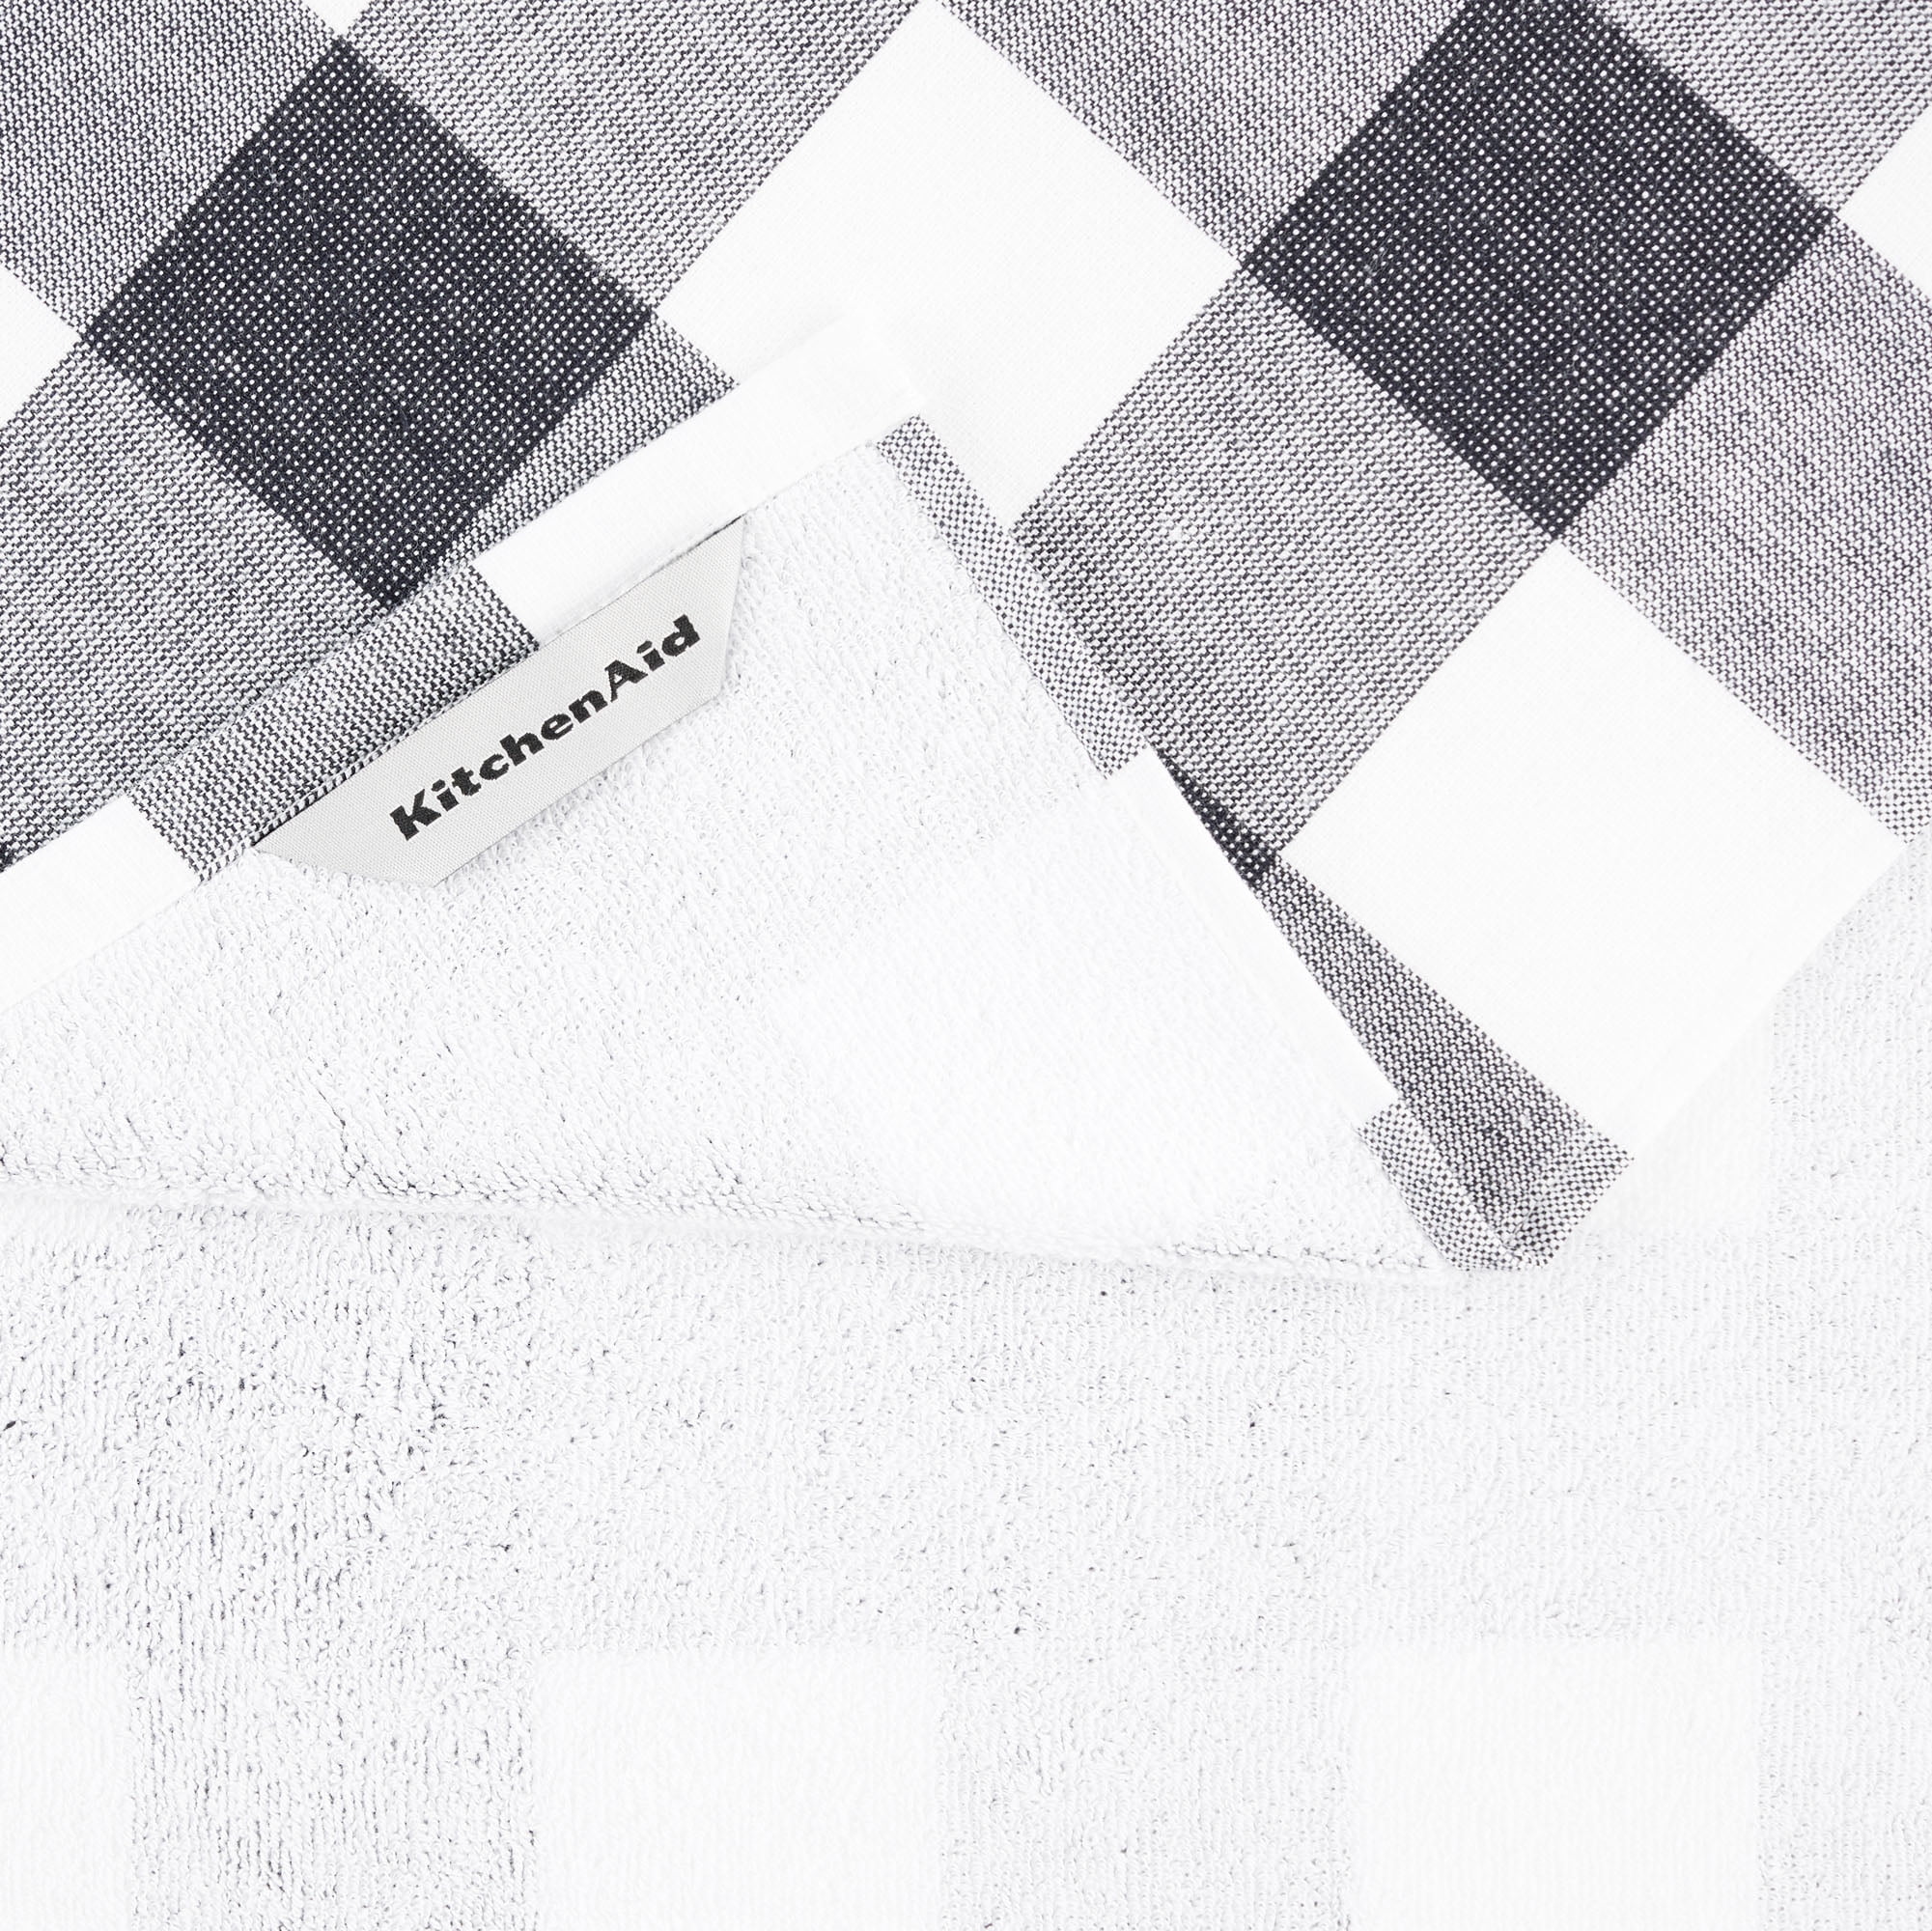 KitchenAid Stripe Gingham Dual Purpose Kitchen Towel 3-Pack Set